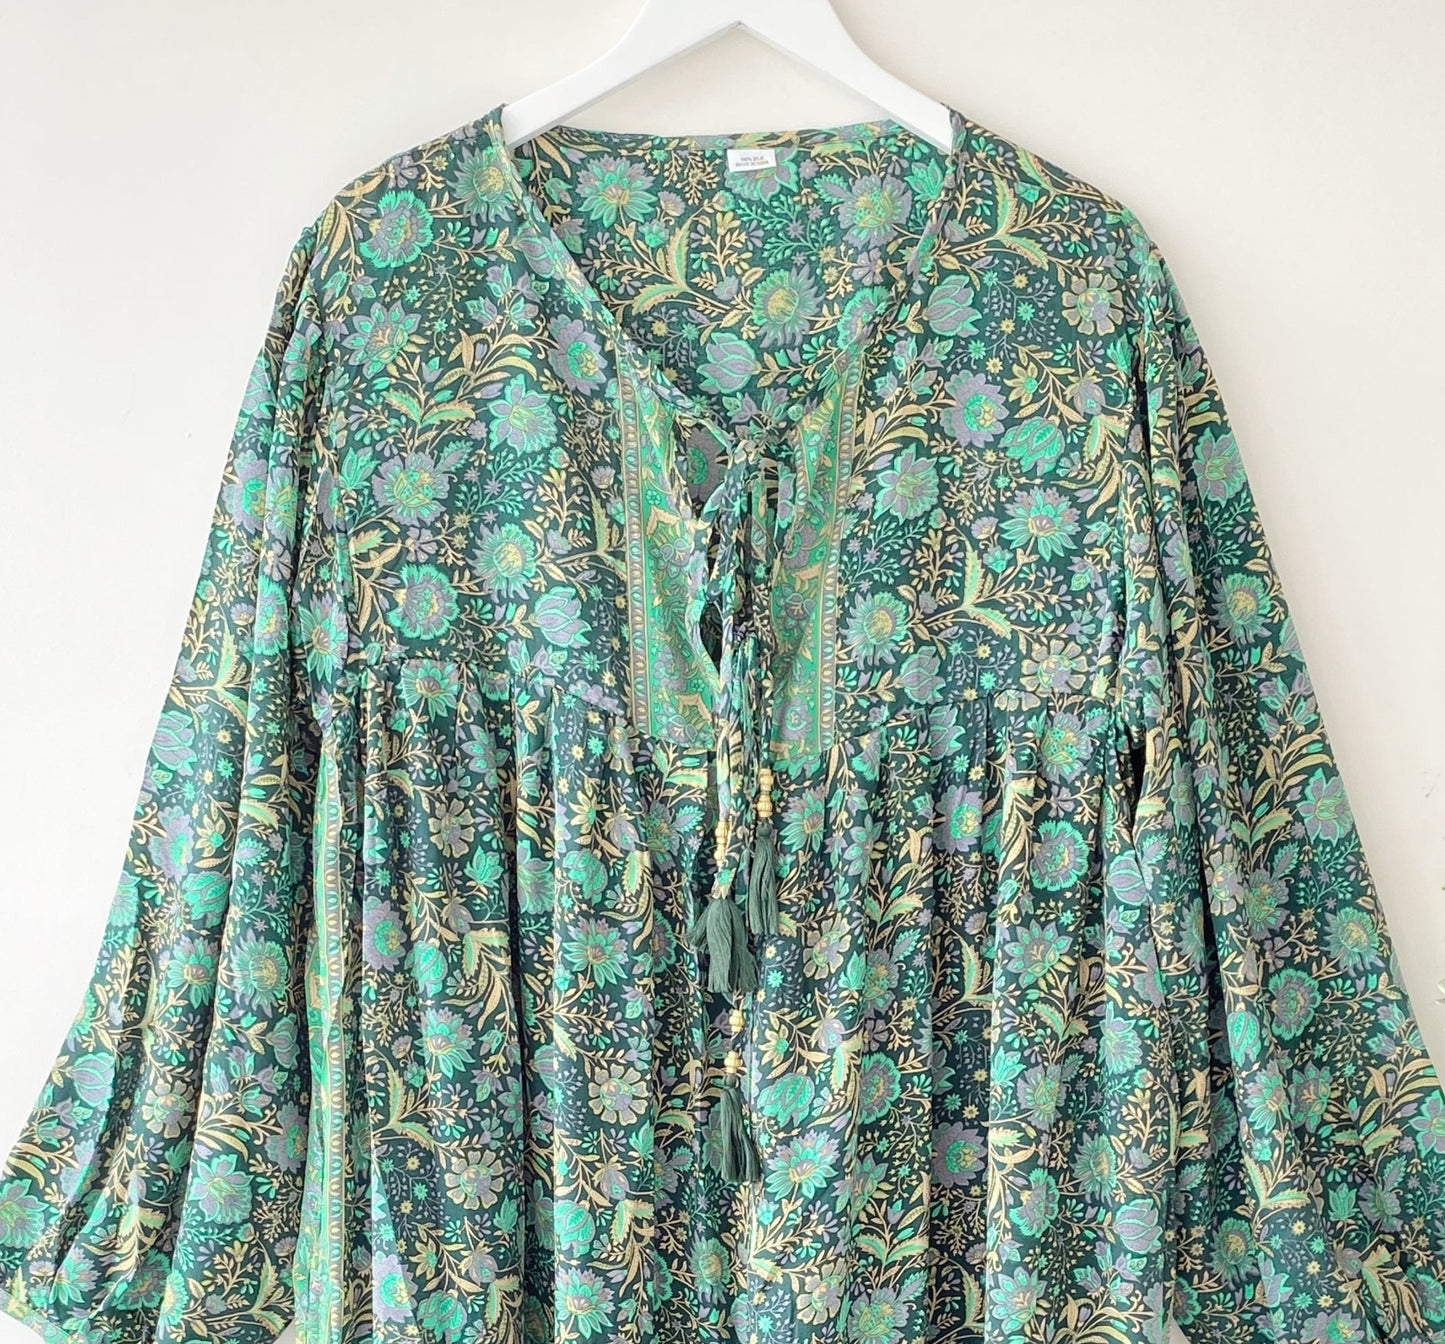 Florence forest-green floral-print silk dress free size UK 8-16DRESSES